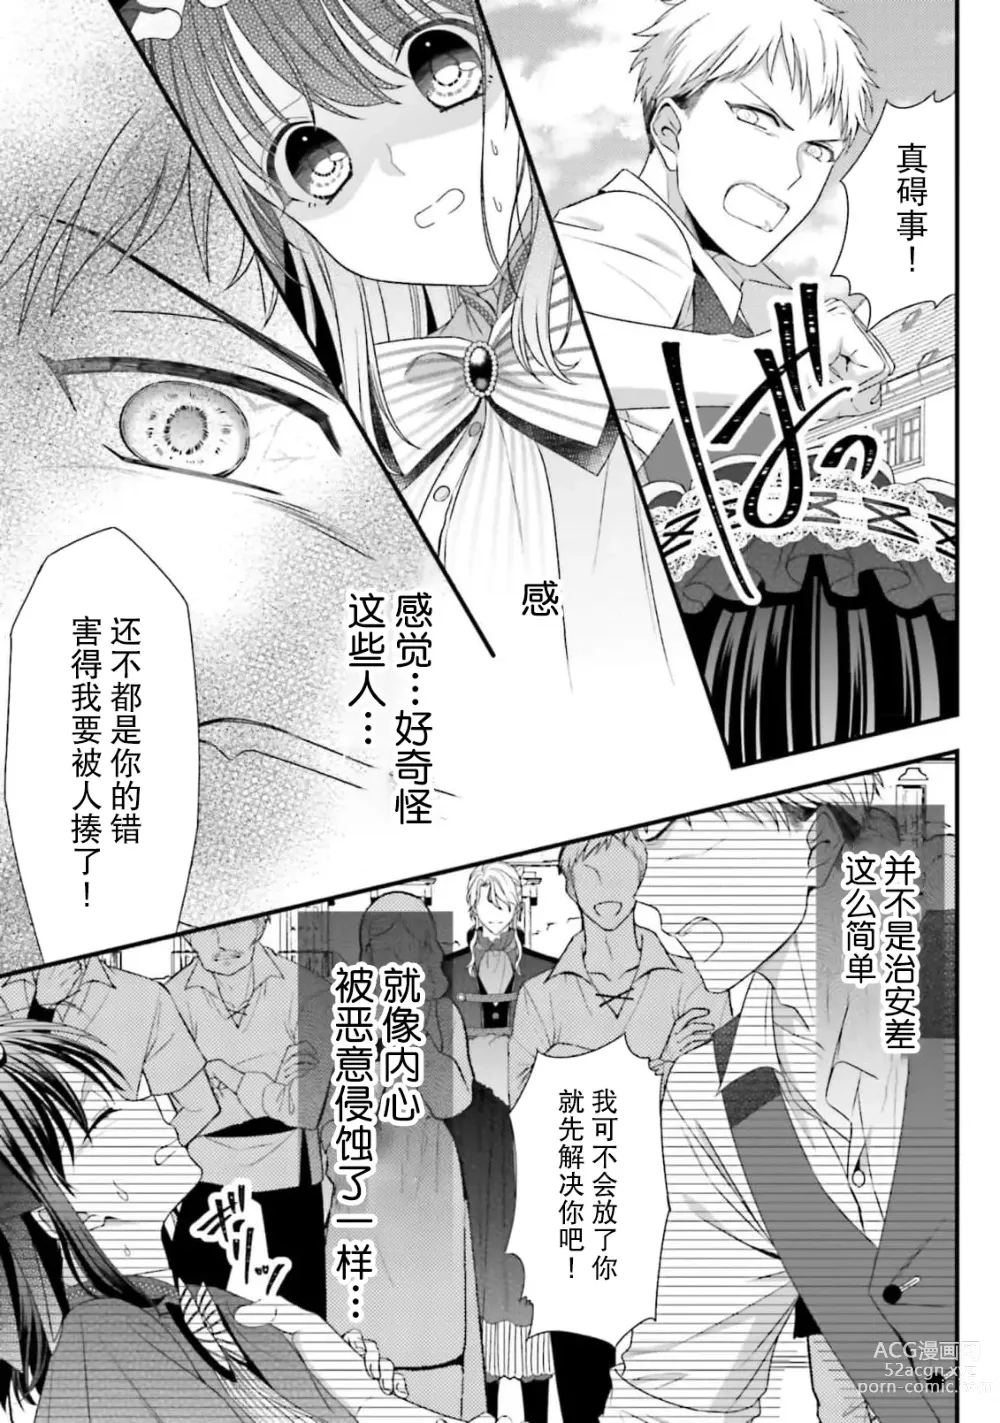 Page 212 of manga 在异世界被非凡的魔导师买下的话会被异常宠爱。 1-8